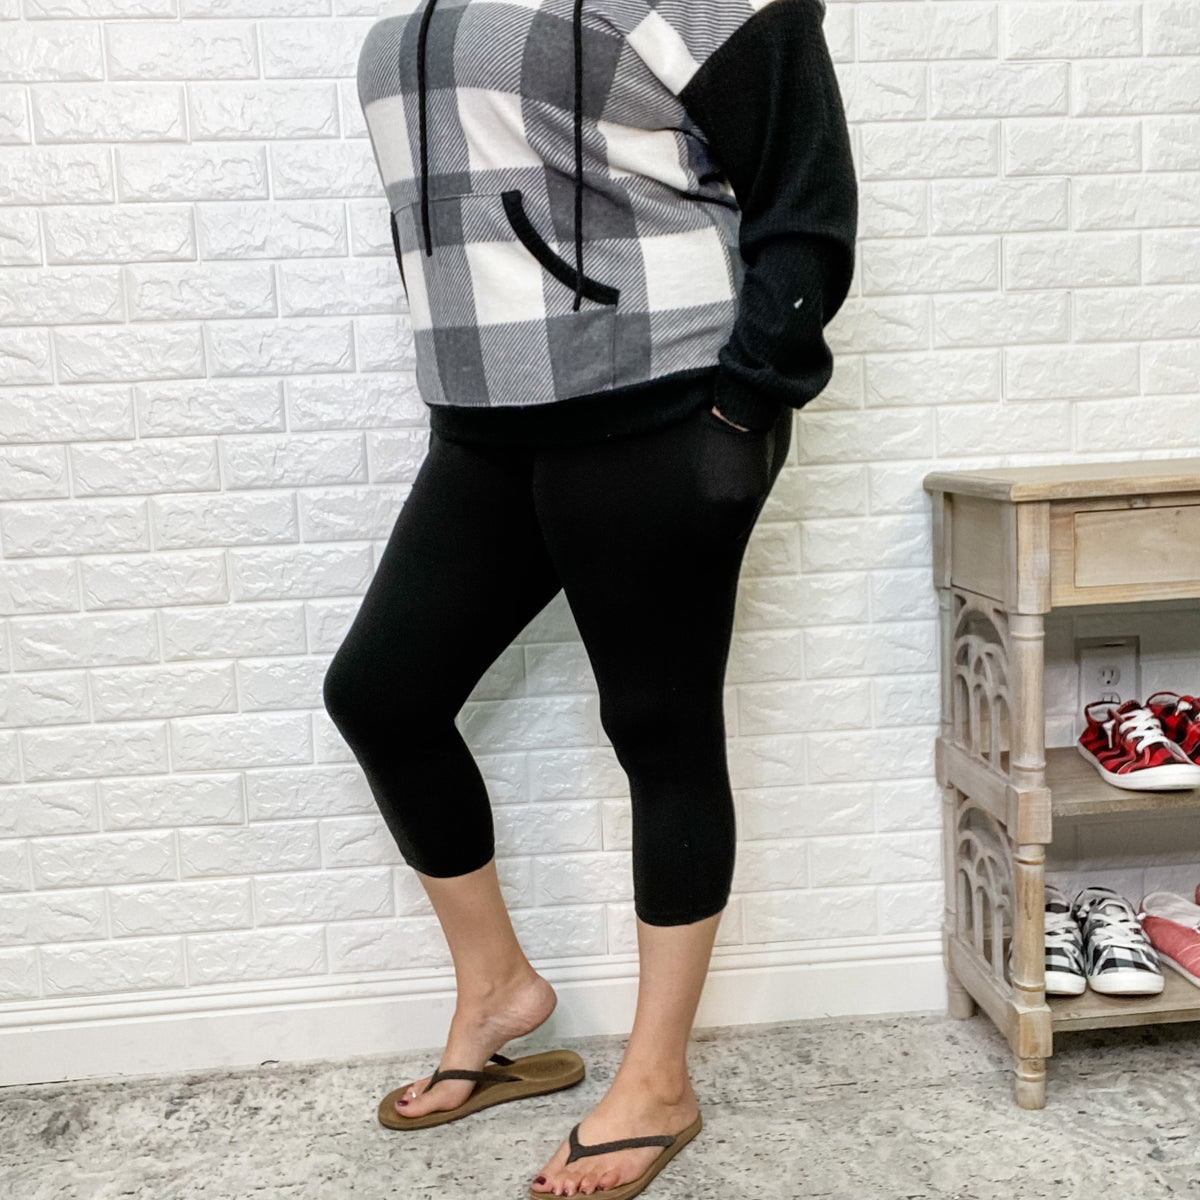 Classic Black Legging Style Capris With Pockets – Lola Monroe Boutique